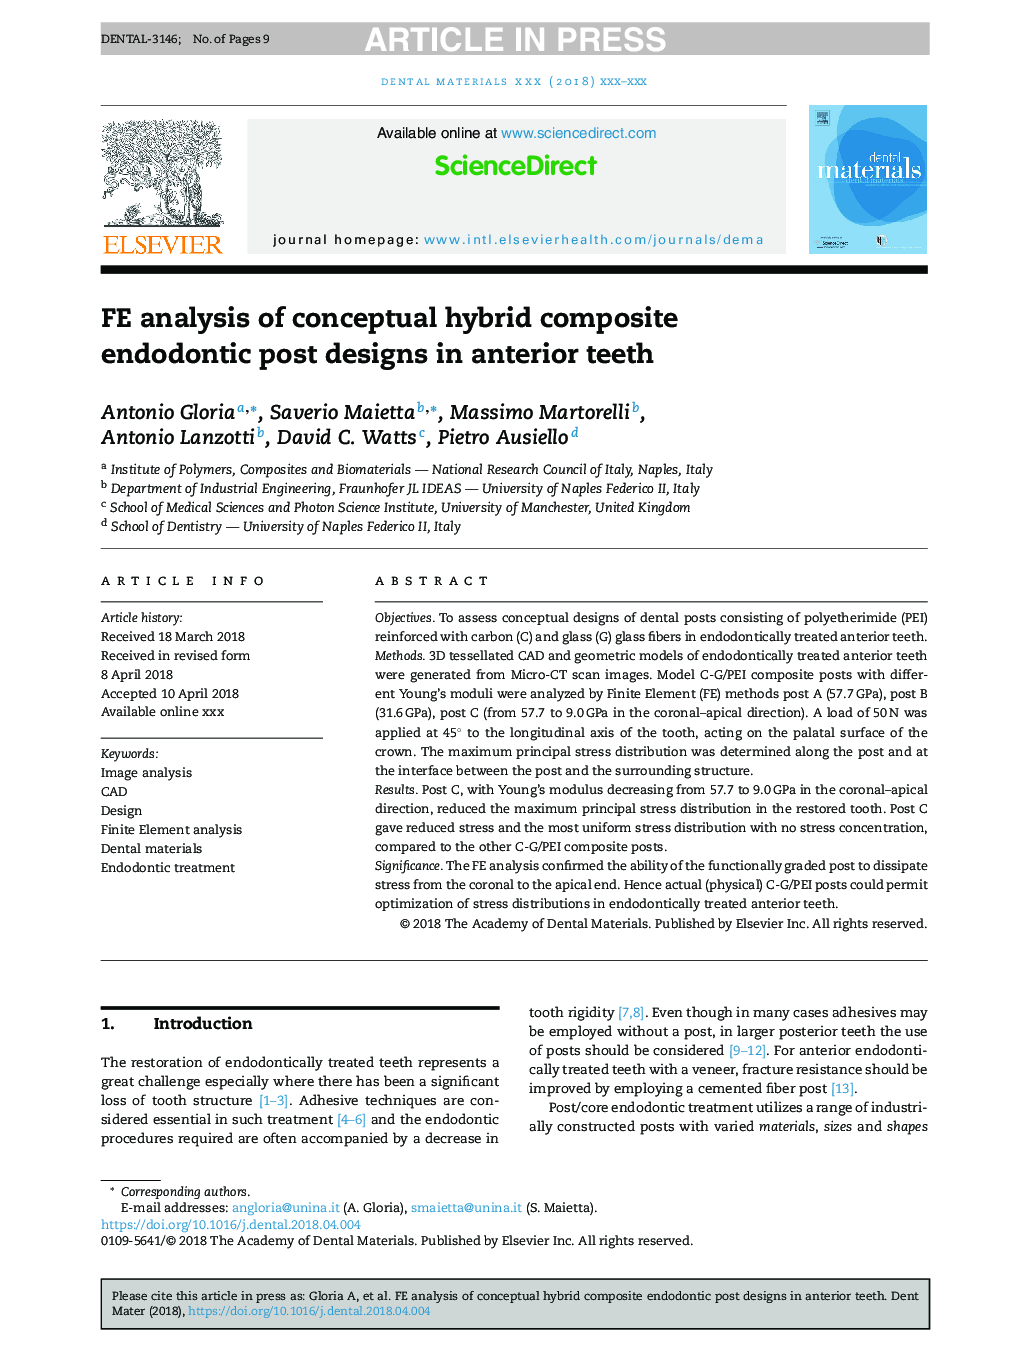 FE analysis of conceptual hybrid composite endodontic post designs in anterior teeth